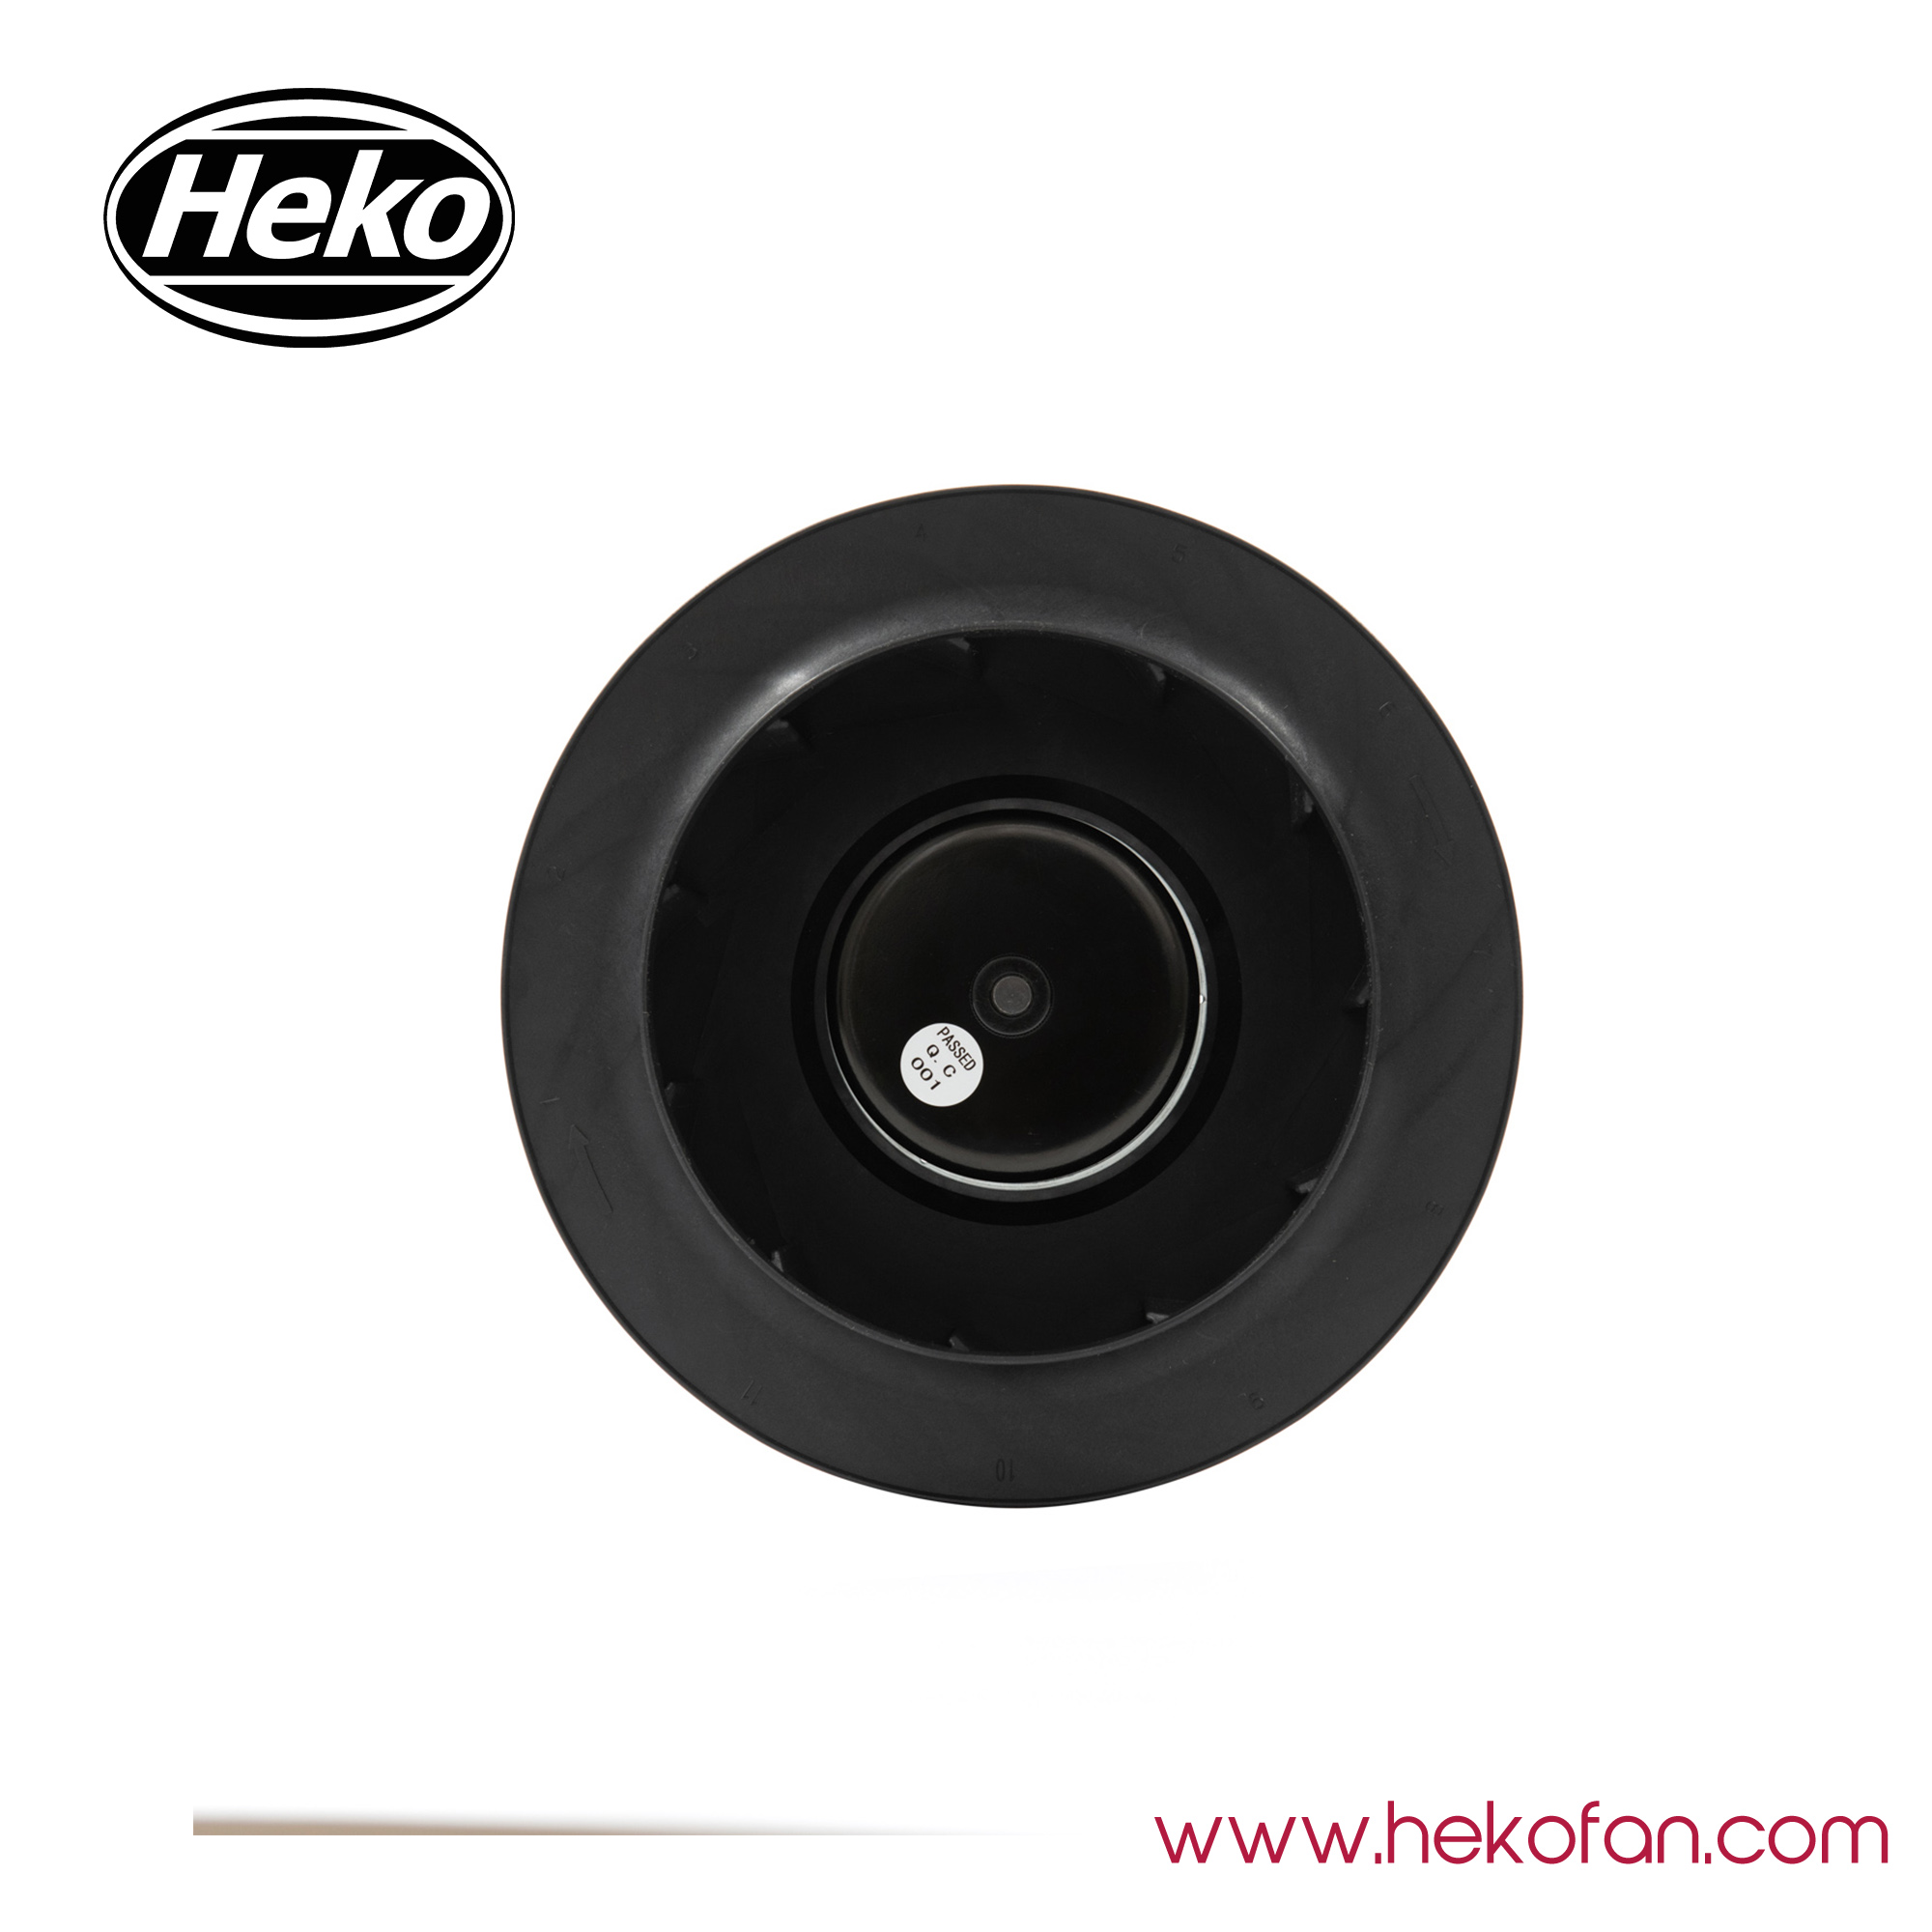 HEKO DC220mm Plastic Impeller Centrifugal Fan For Vehicle Equip